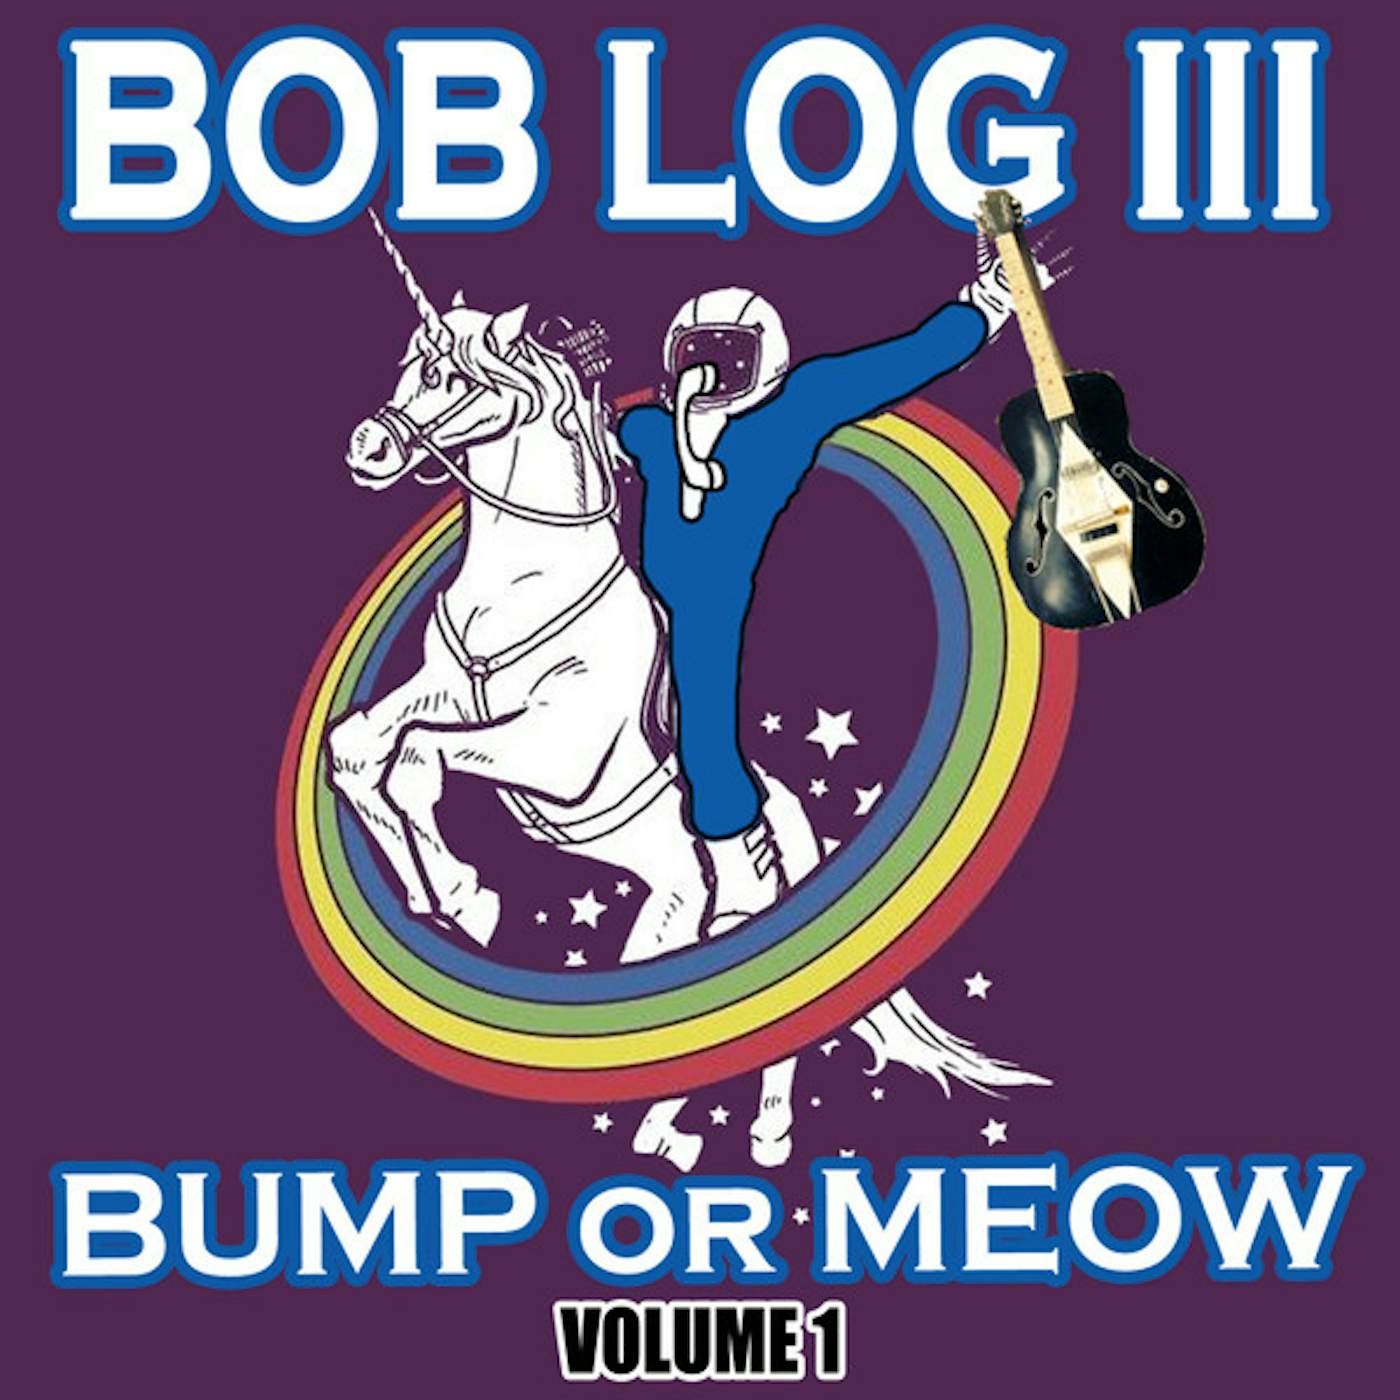 Bob Log III Bump Or Meow Volume 1 Vinyl Record